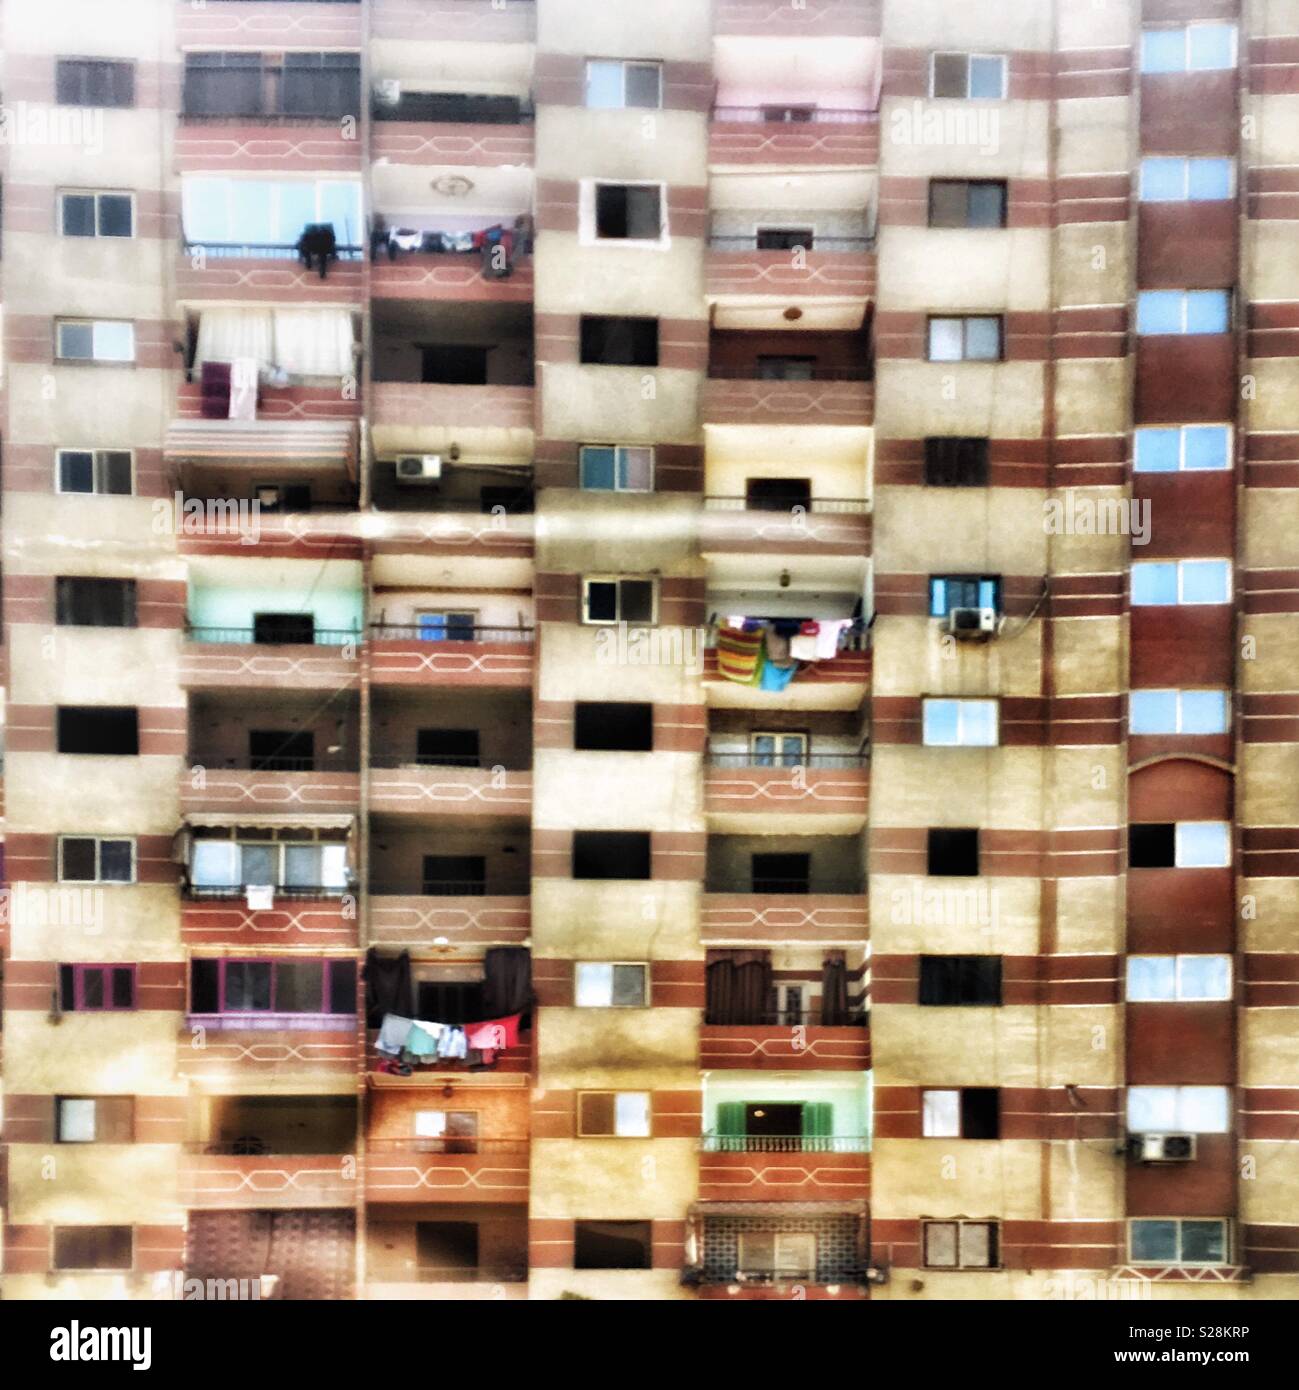 Cairo flats Stock Photo